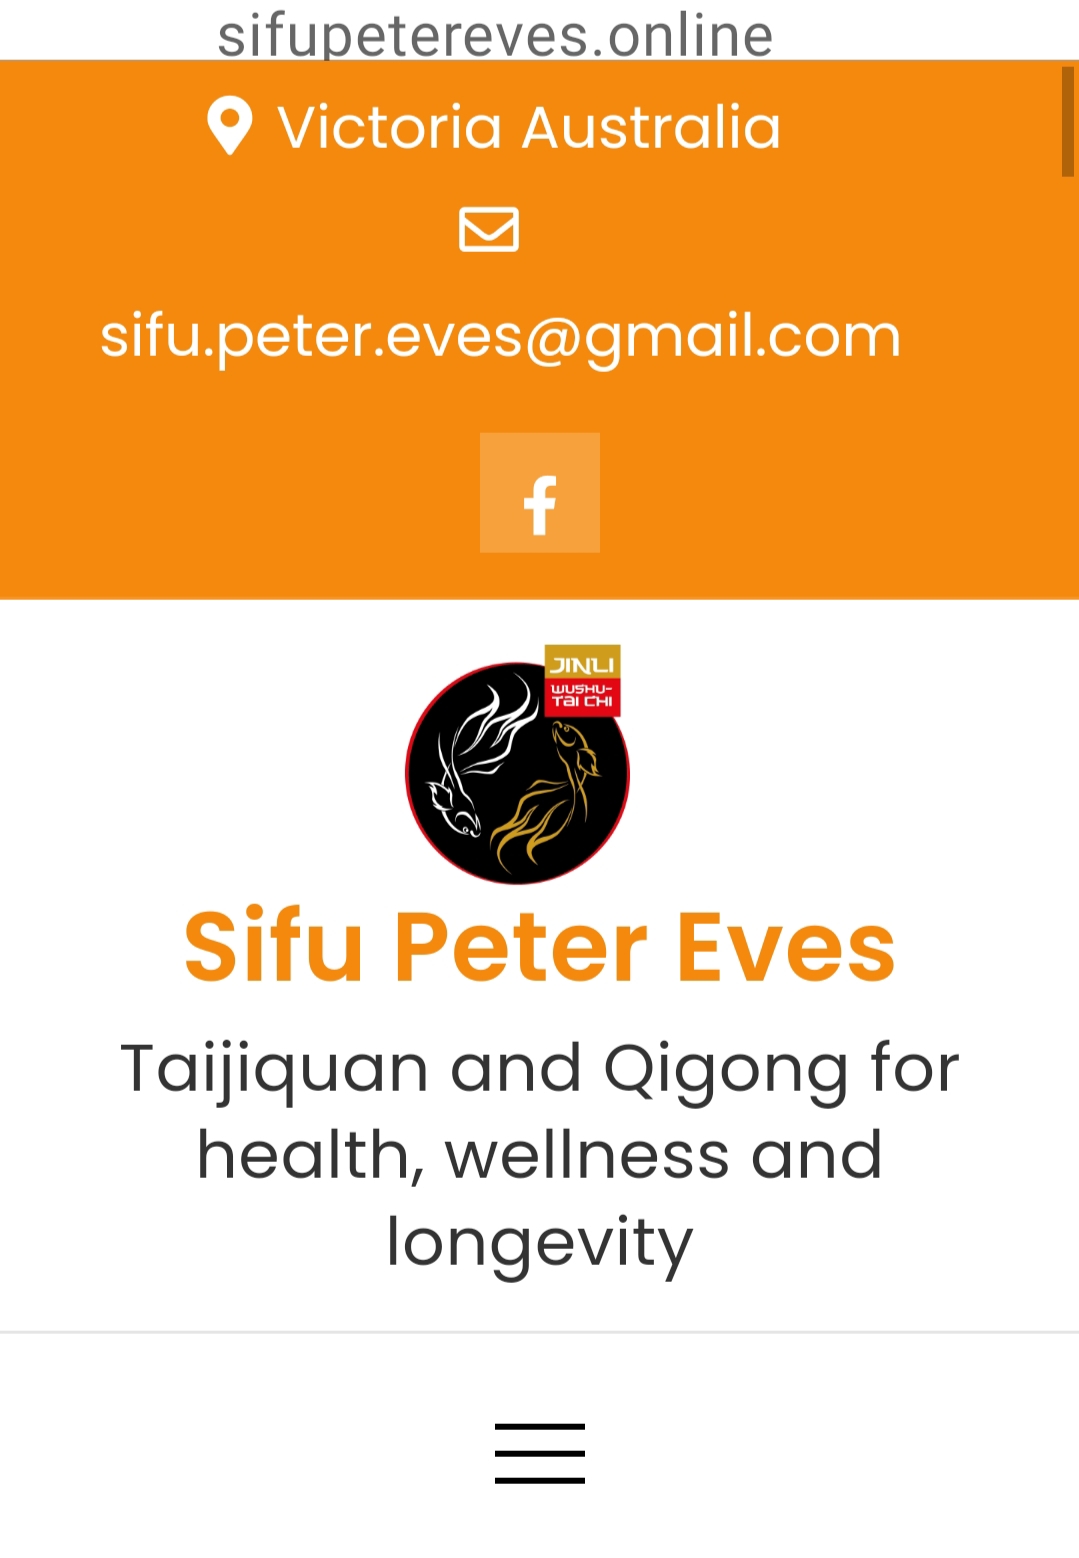 Sifu Peter Eves - Blog